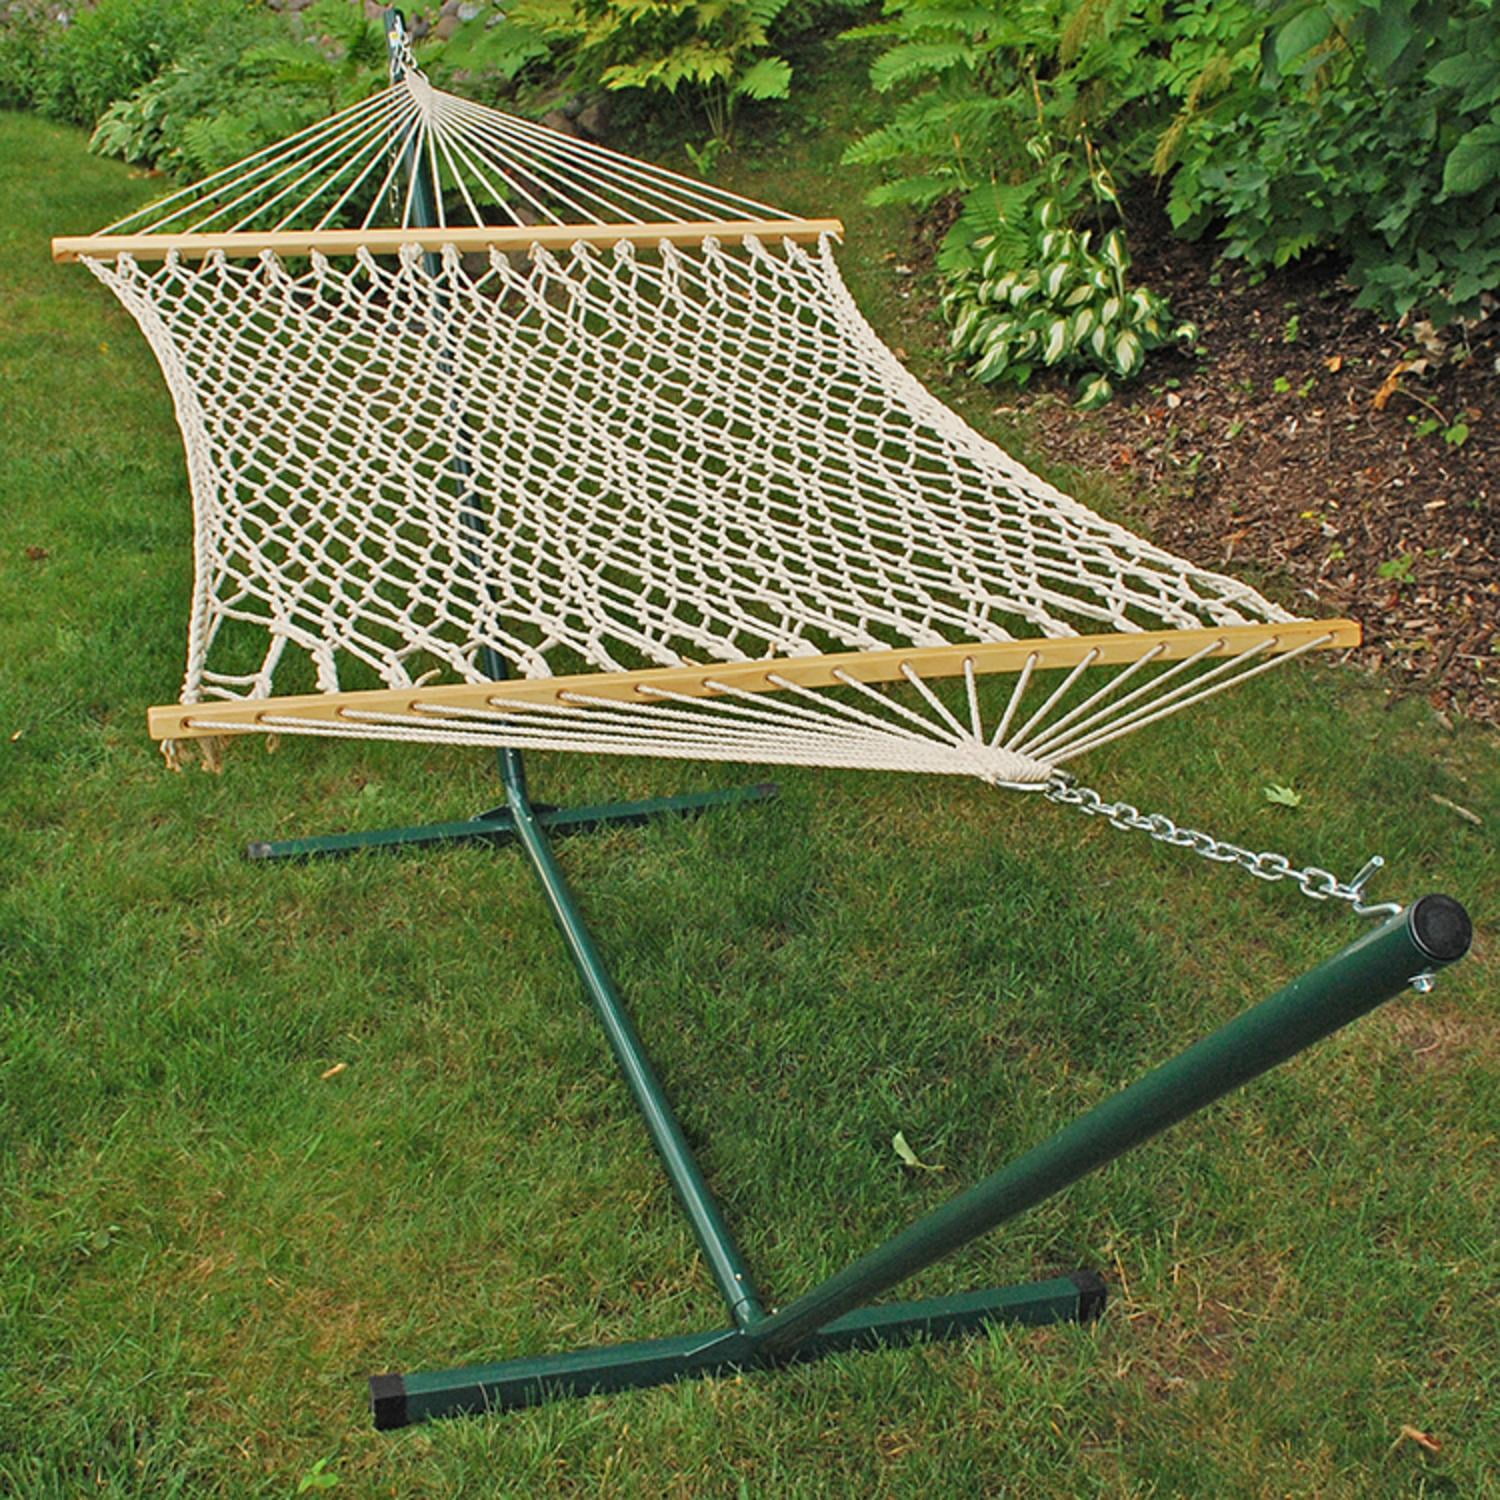 Single hammock stand